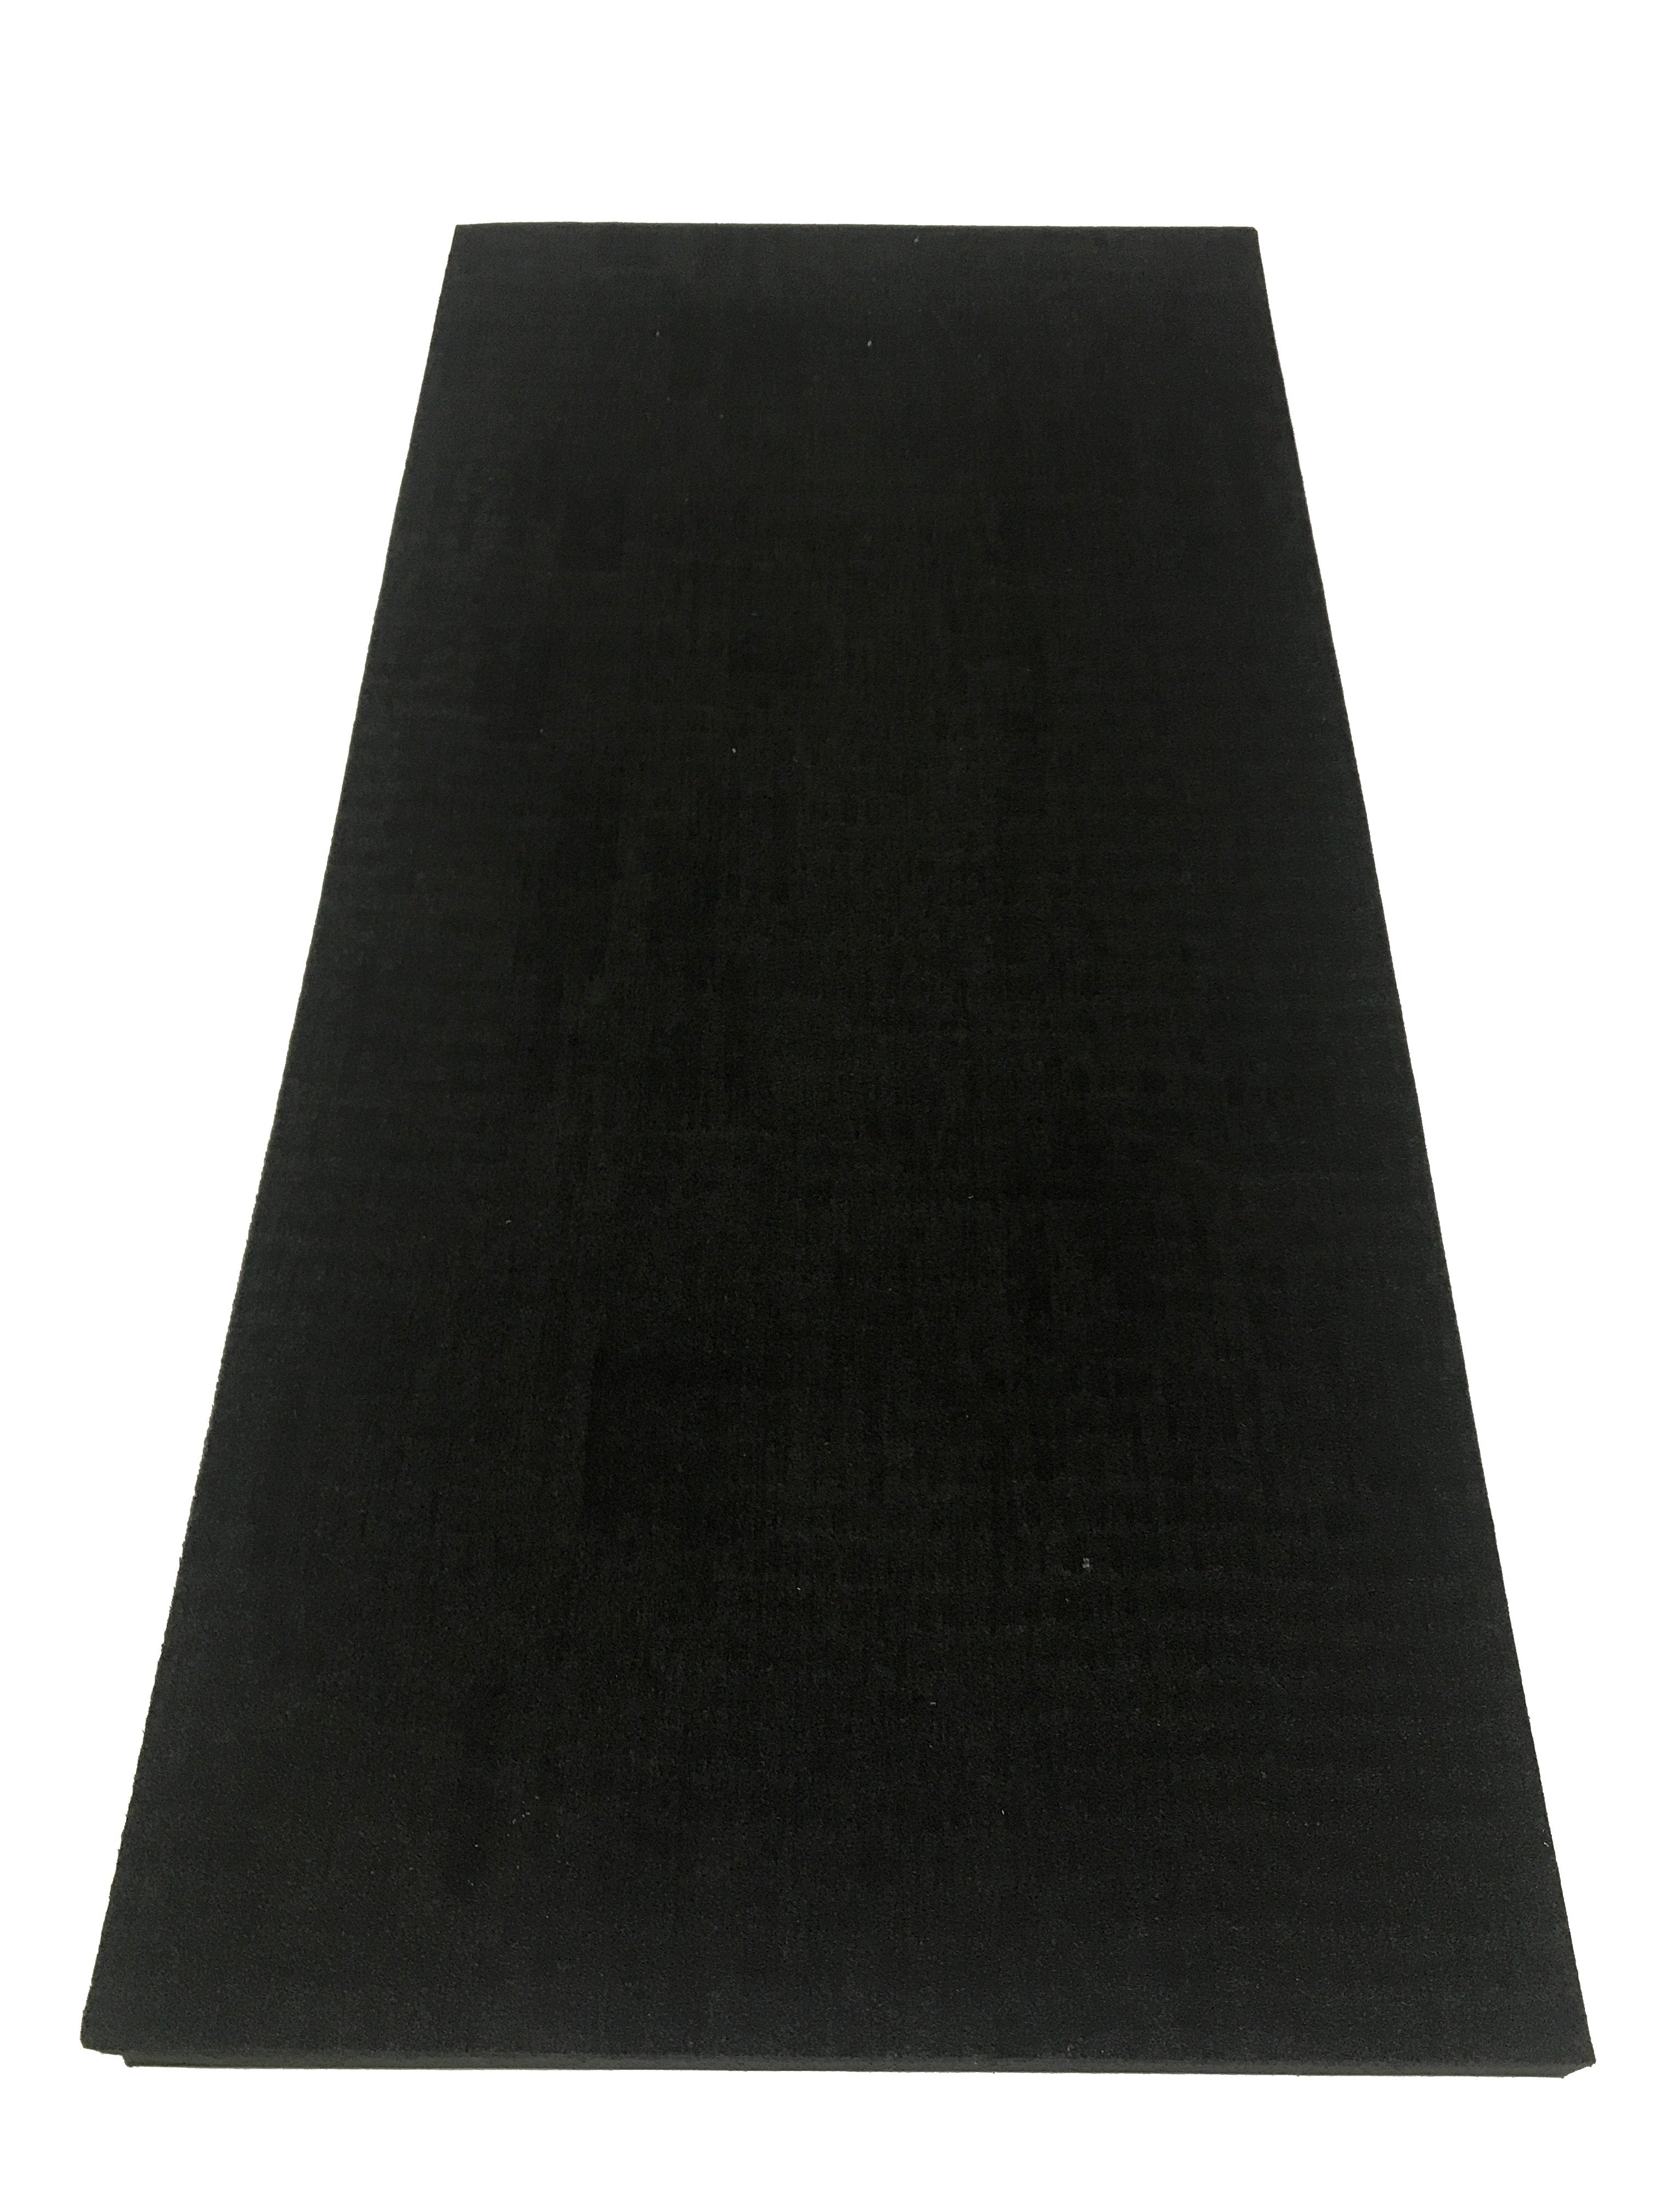 Silent Panel 10kg/50mm 600x1200- Barrier Foam Composite Acoustic Panel Adhesive Backed - Advanced Acoustics